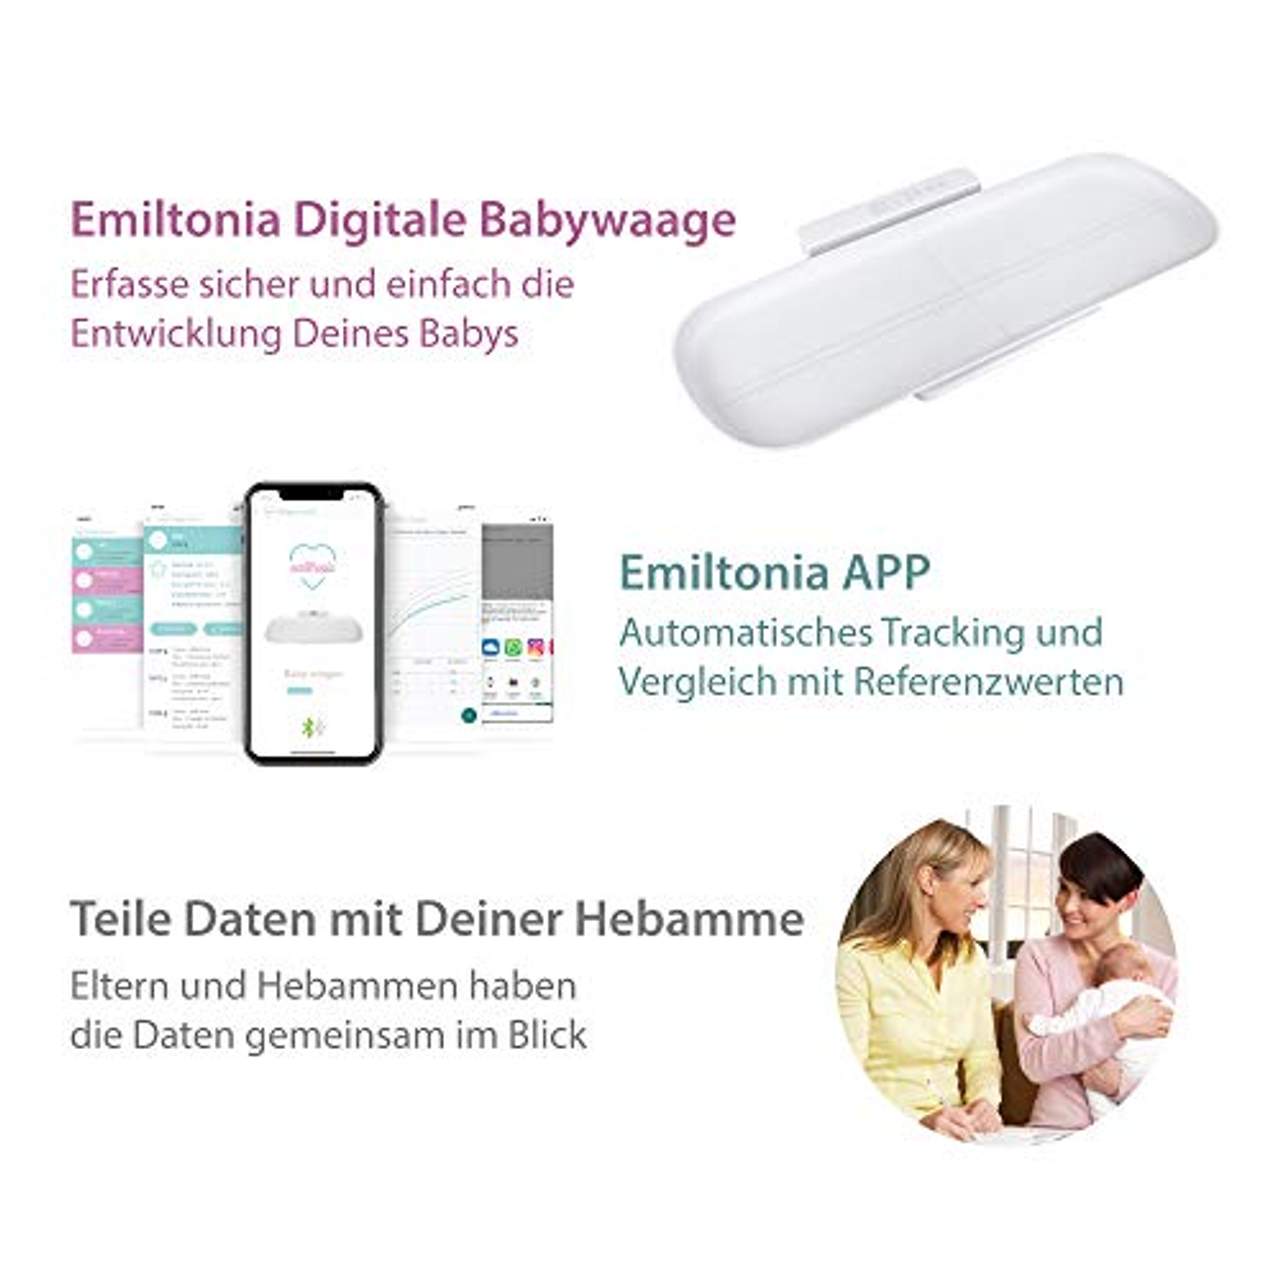 Smartphone-fähige Emiltonia Babywaage inkl. Gratis APP für iOS